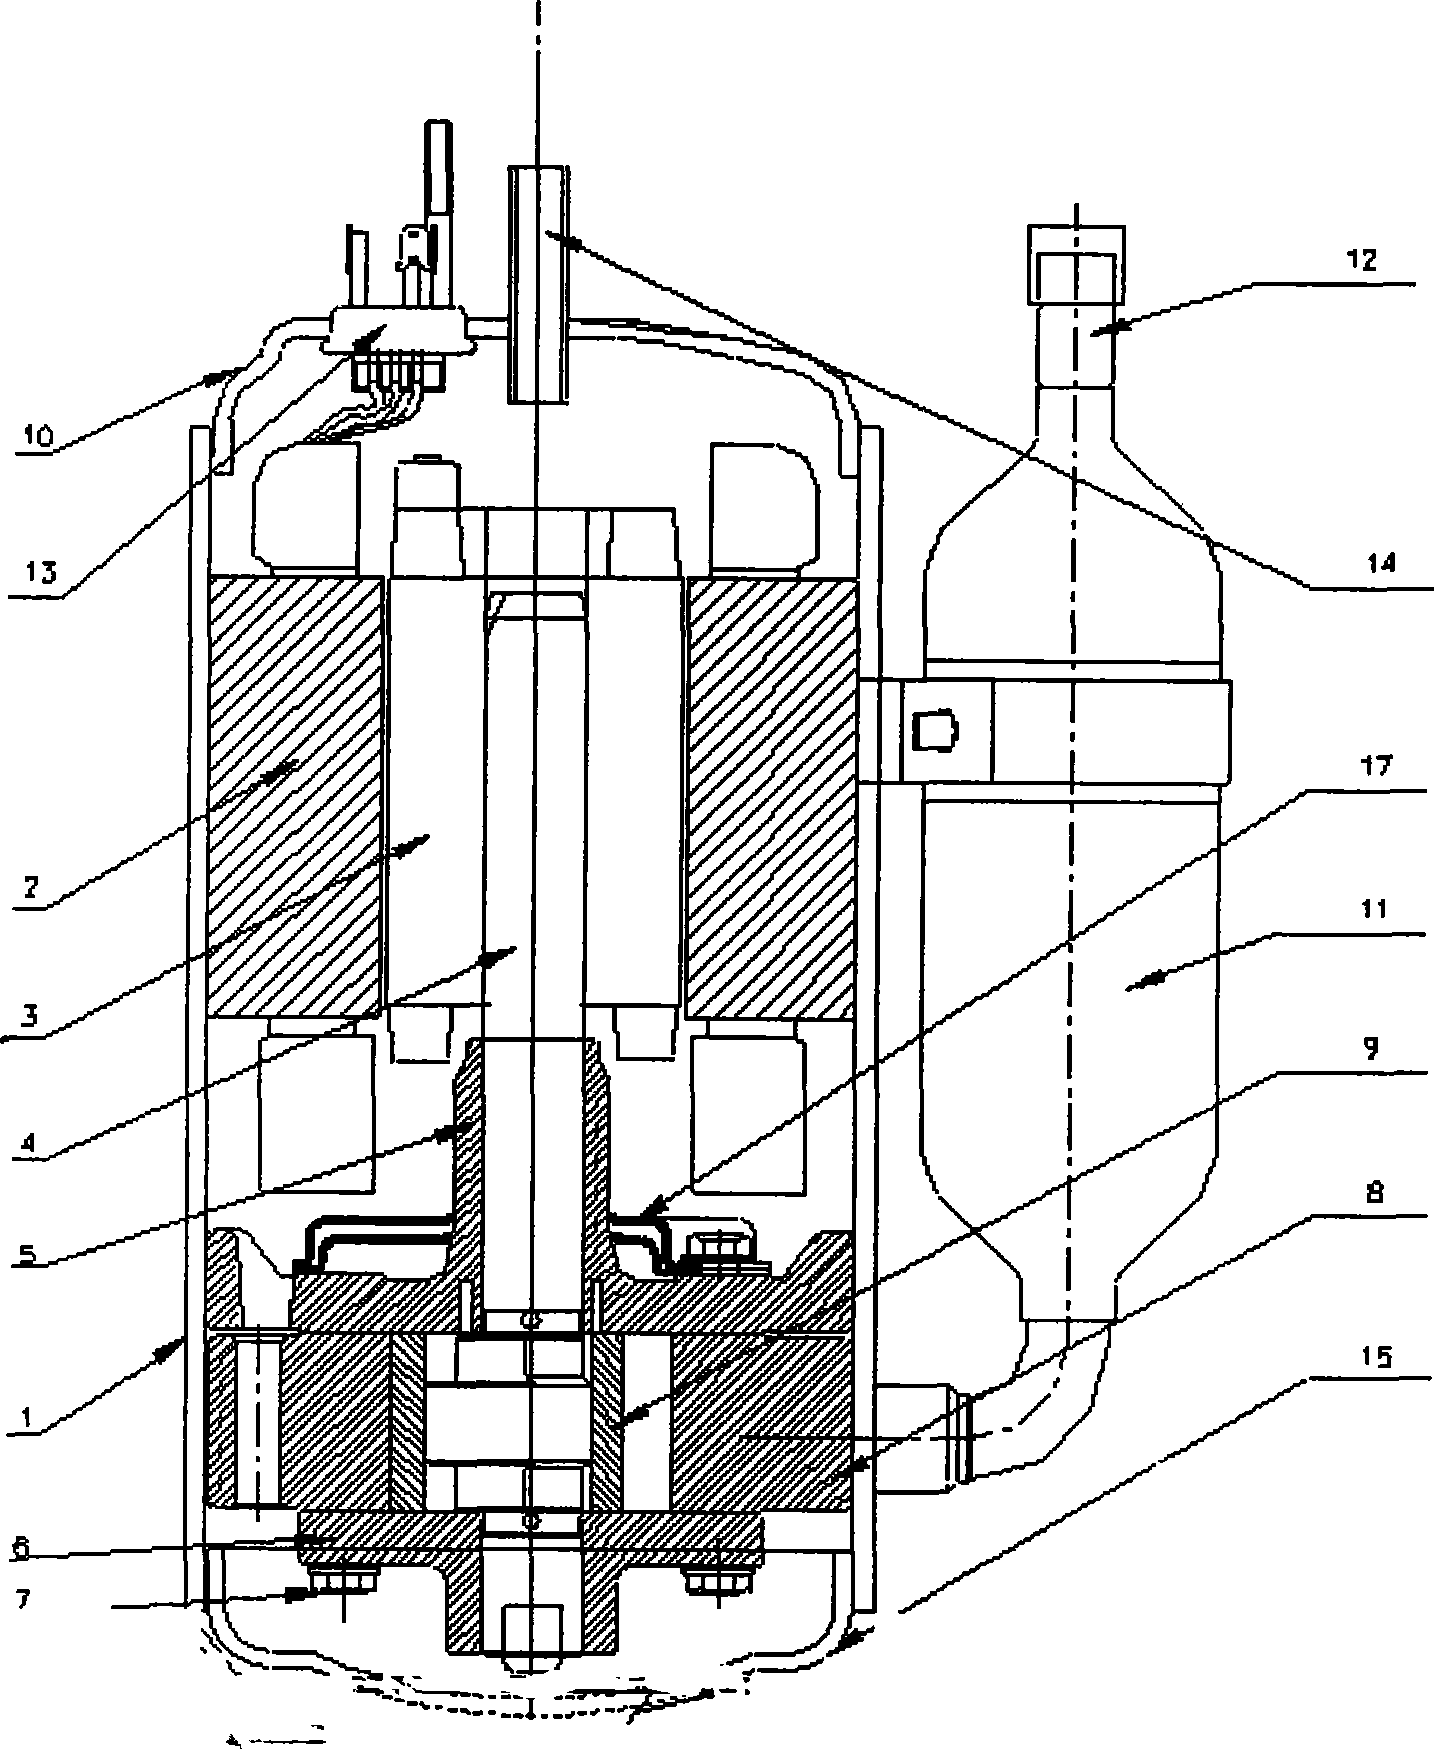 Base corner of rotary compressor